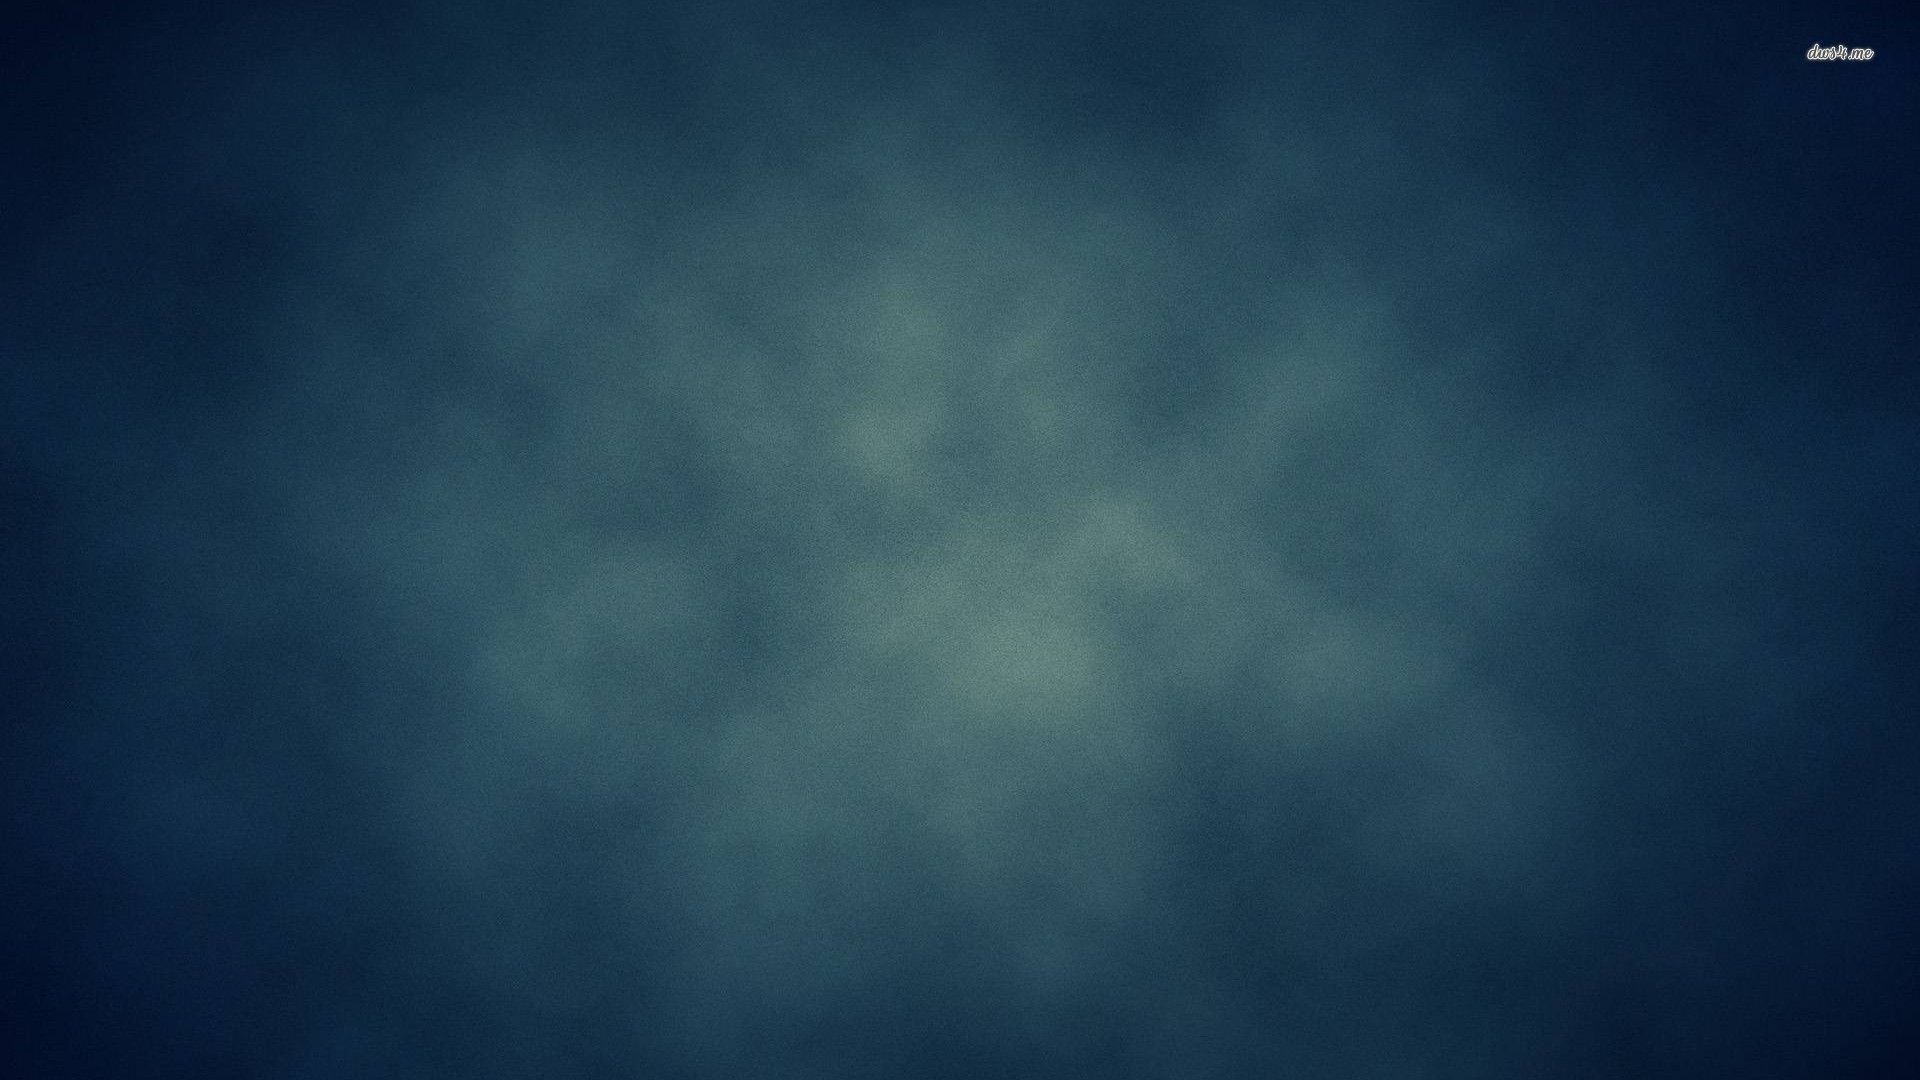 Blue blur wallpaper - Abstract wallpapers - #12625